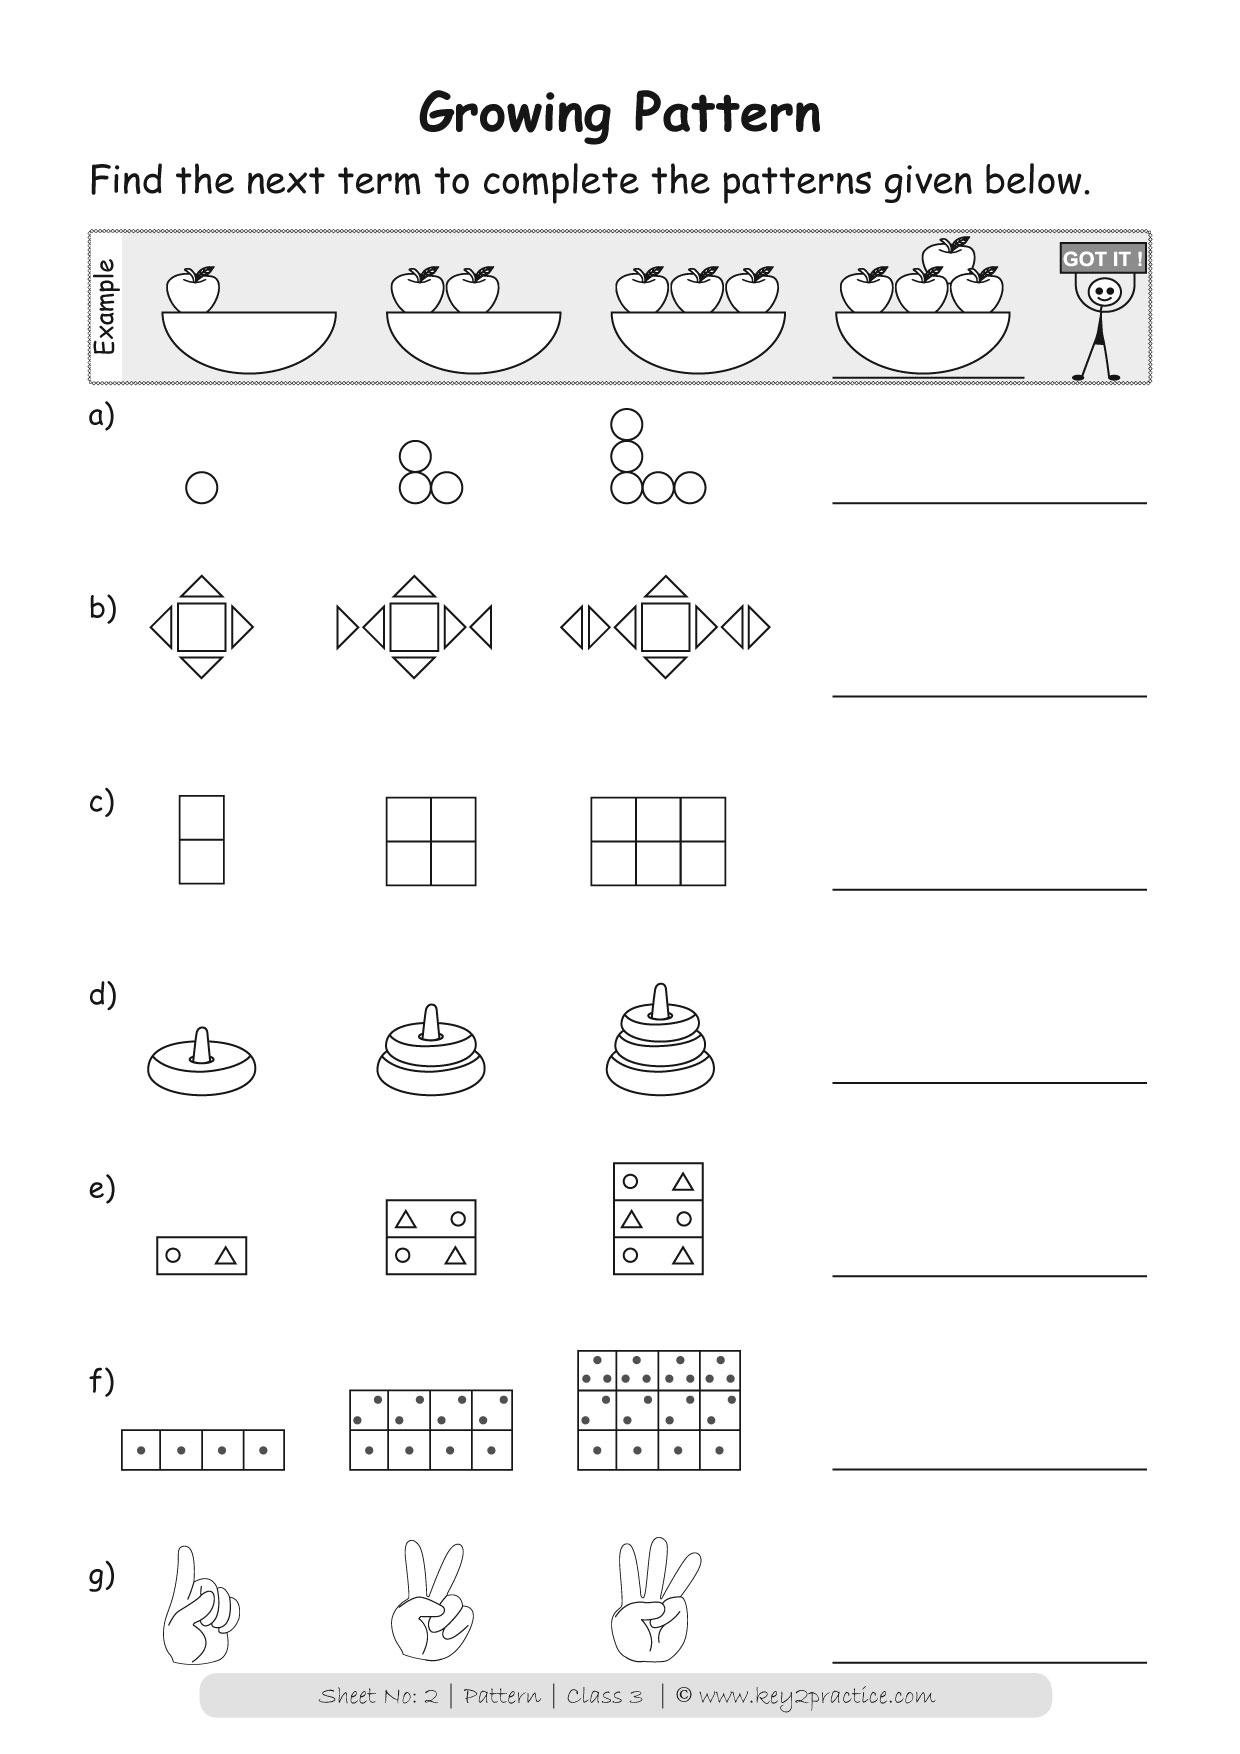 maths worksheets grade 3 patterns key2practice workbooks